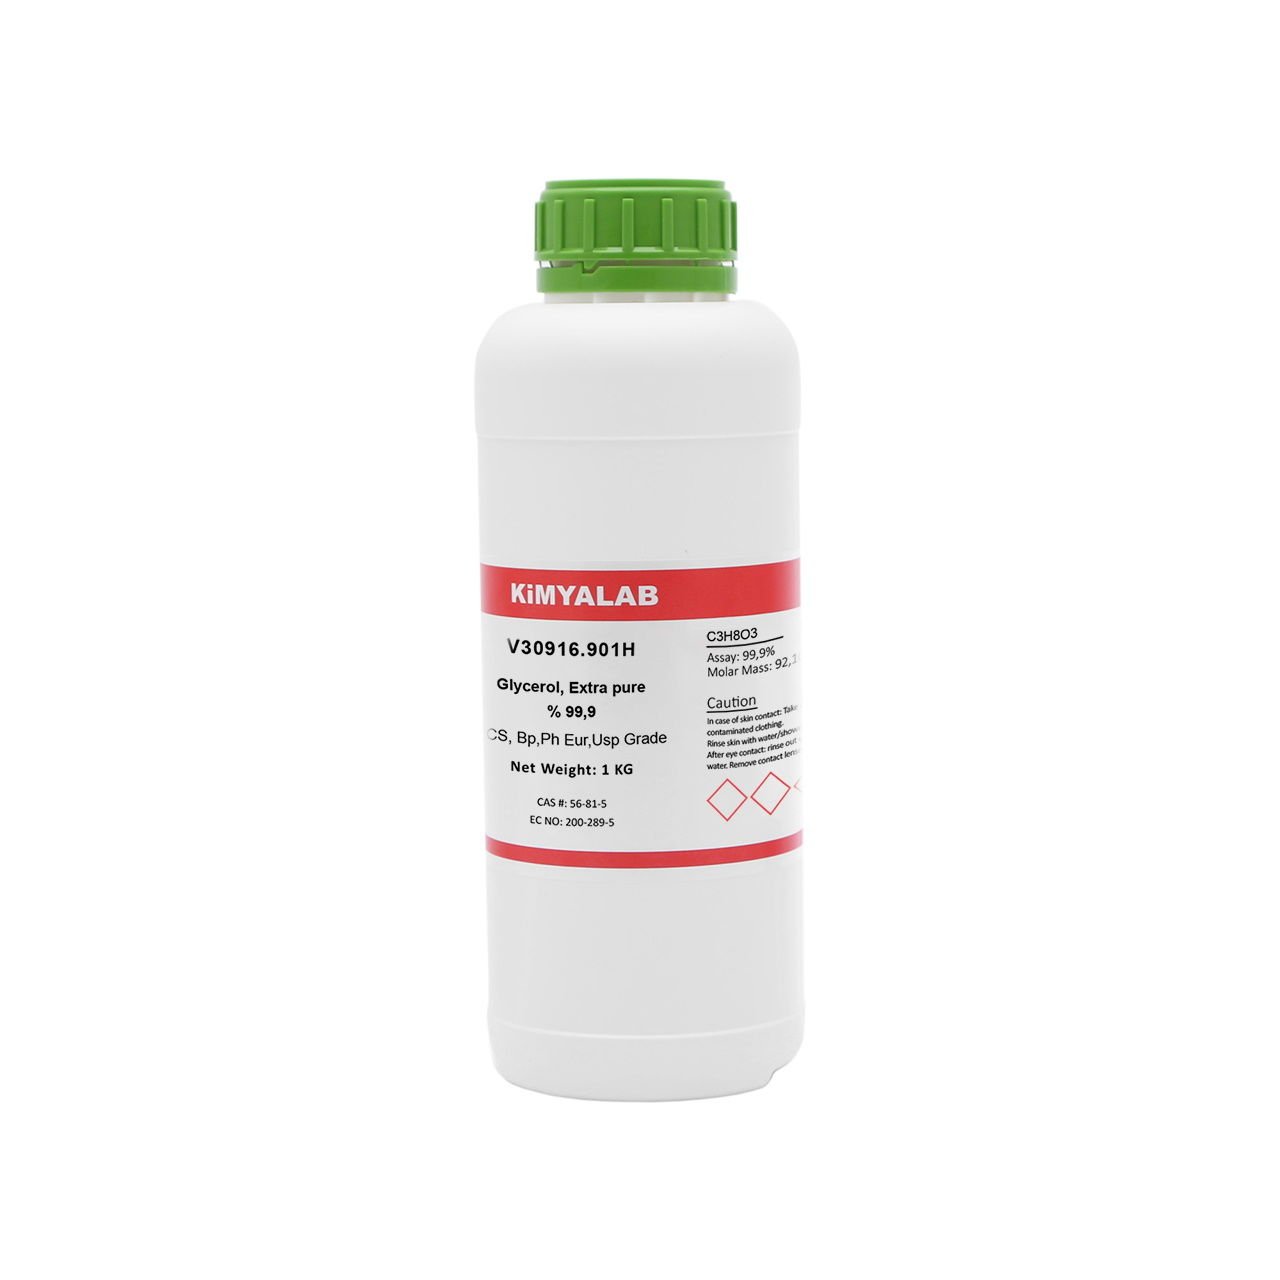 Kimyalab Gliserin 1 Kg - Glycerol %99,8 - Bitkisel Farma Kalite Glycerine